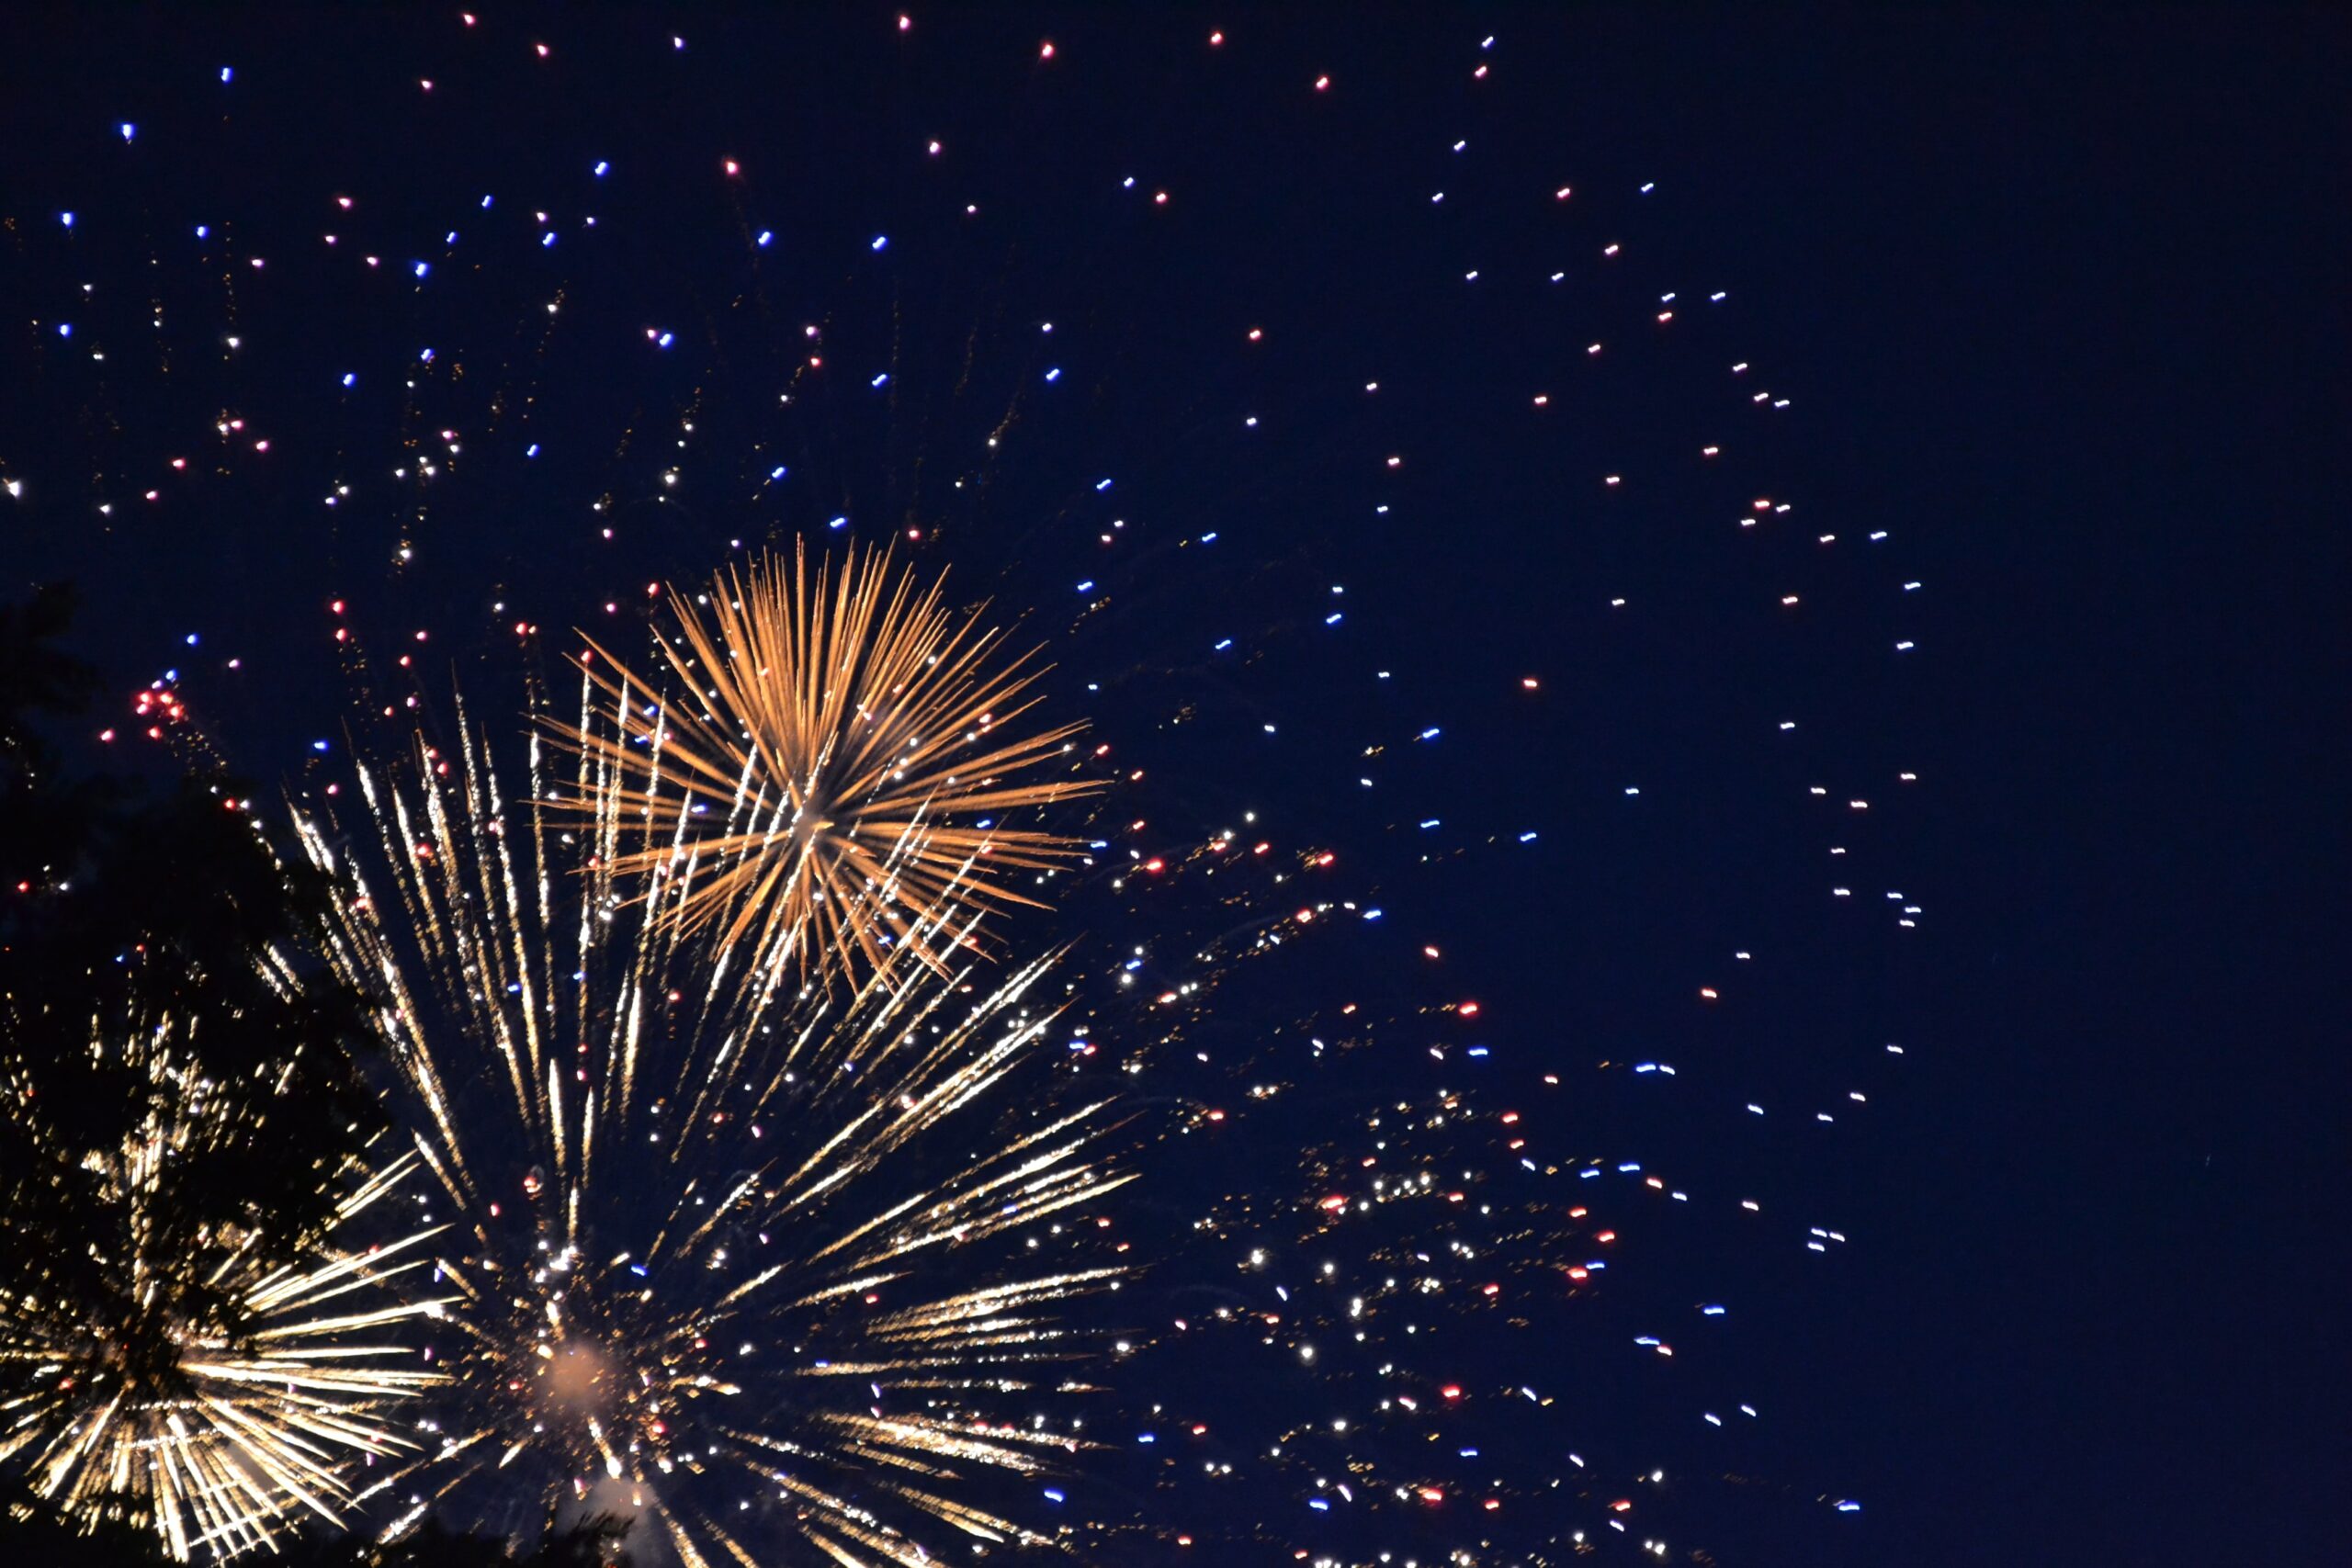 Manassas has the best fireworks display in Northern Virginia